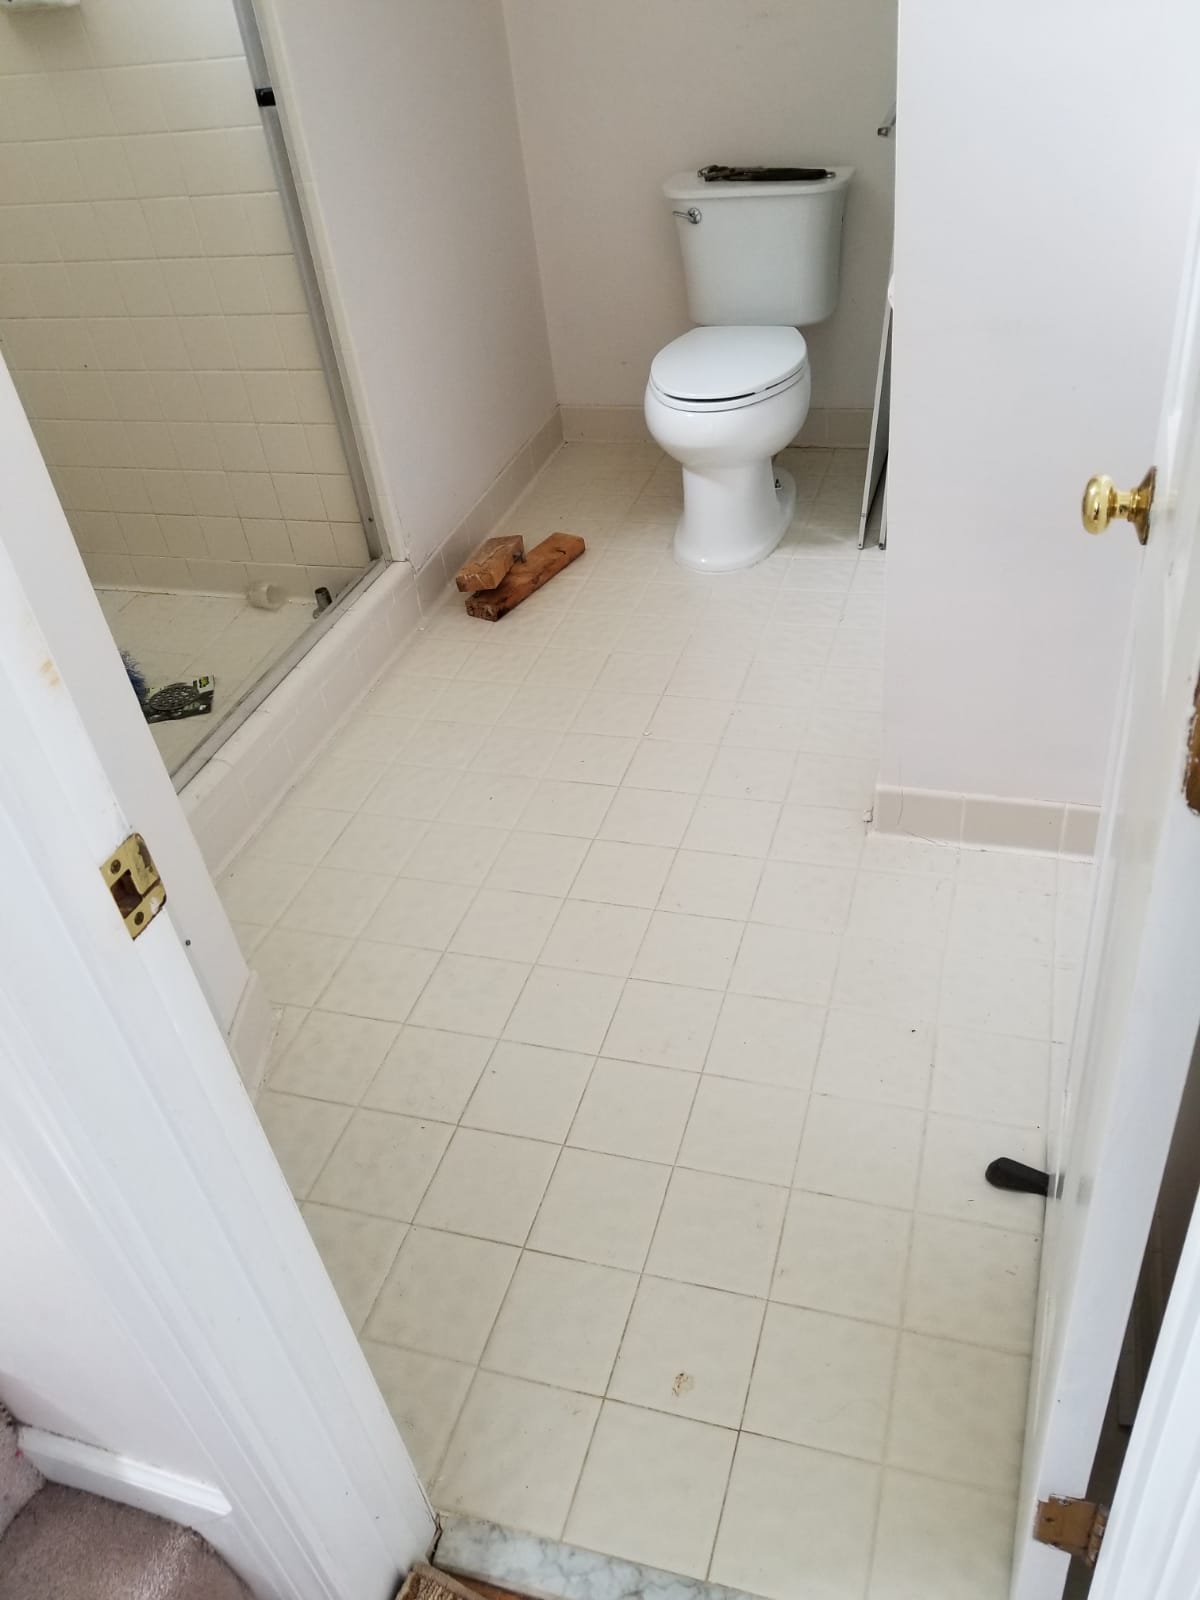 toilet and floor.jpg